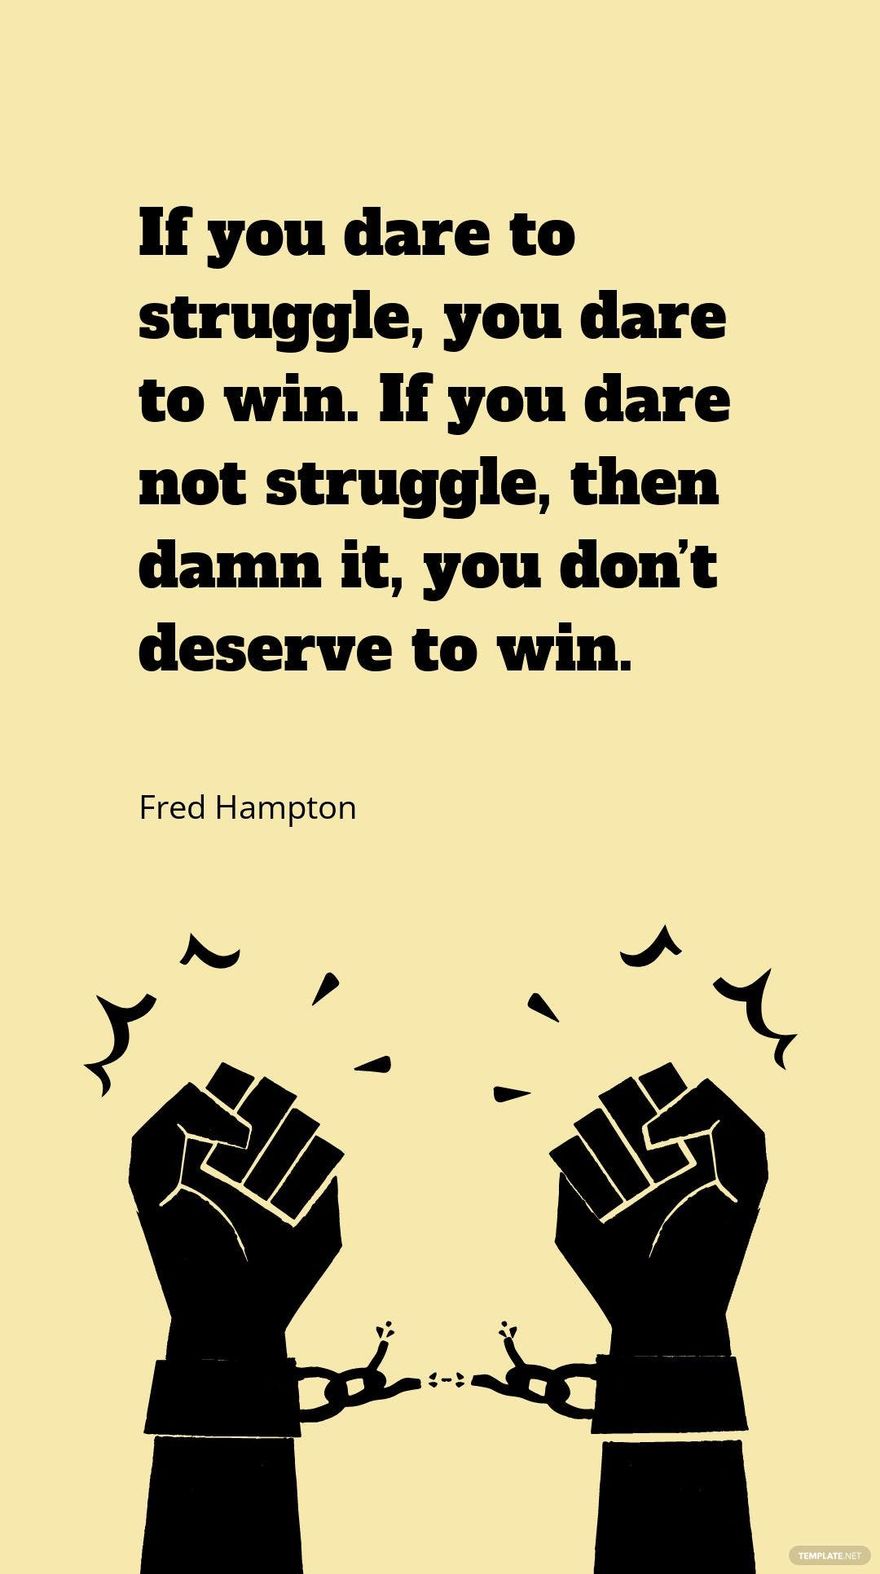  Fred Hampton - If you dare to struggle, you dare to win. If you dare not struggle, then damn it, you don’t deserve to win.